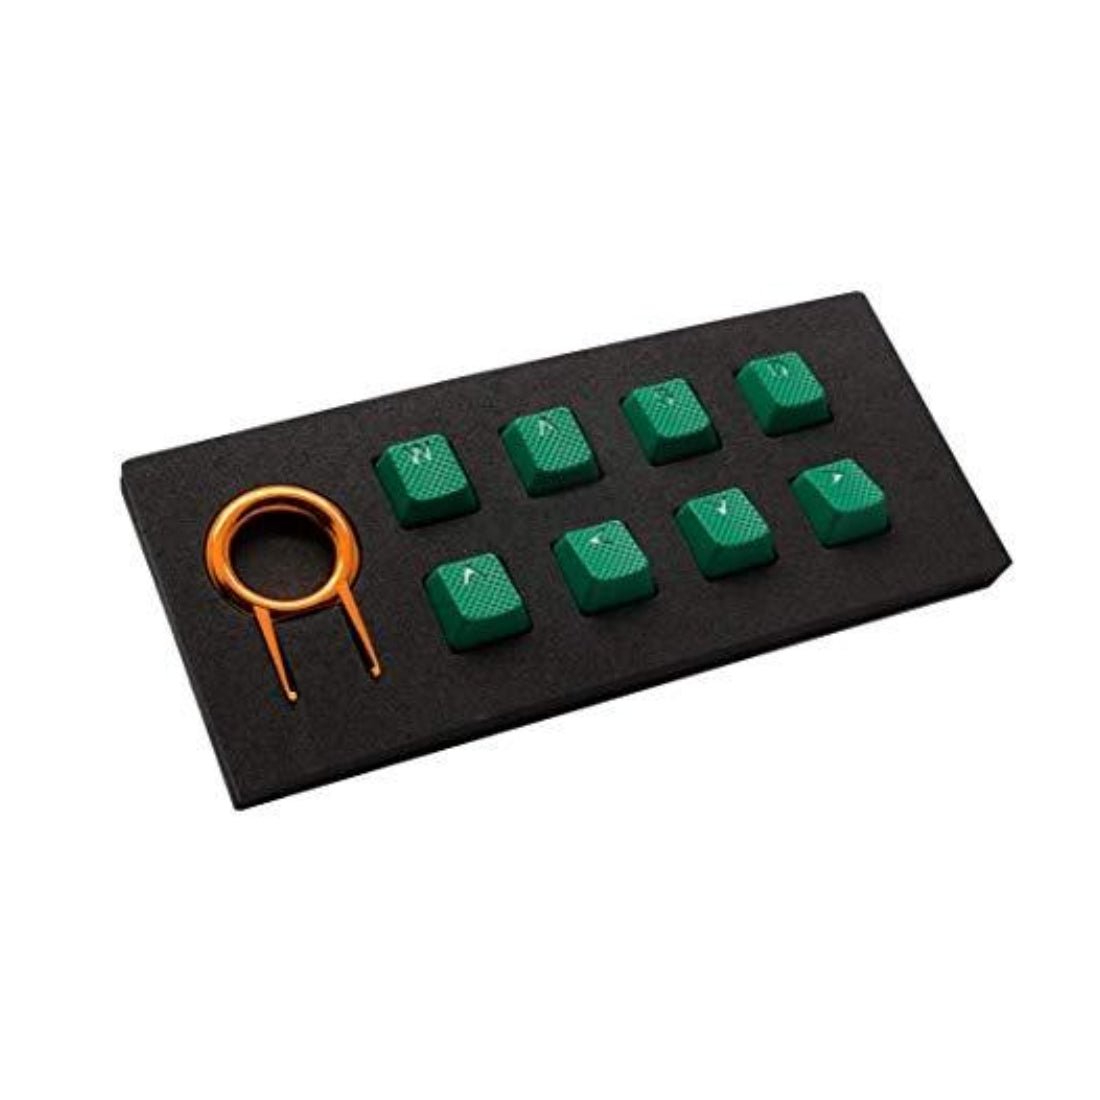 Tai-Hao 8 Key ABS Rubber Keycaps - Green - أكسسوار لوحة مفاتيح - Store 974 | ستور ٩٧٤